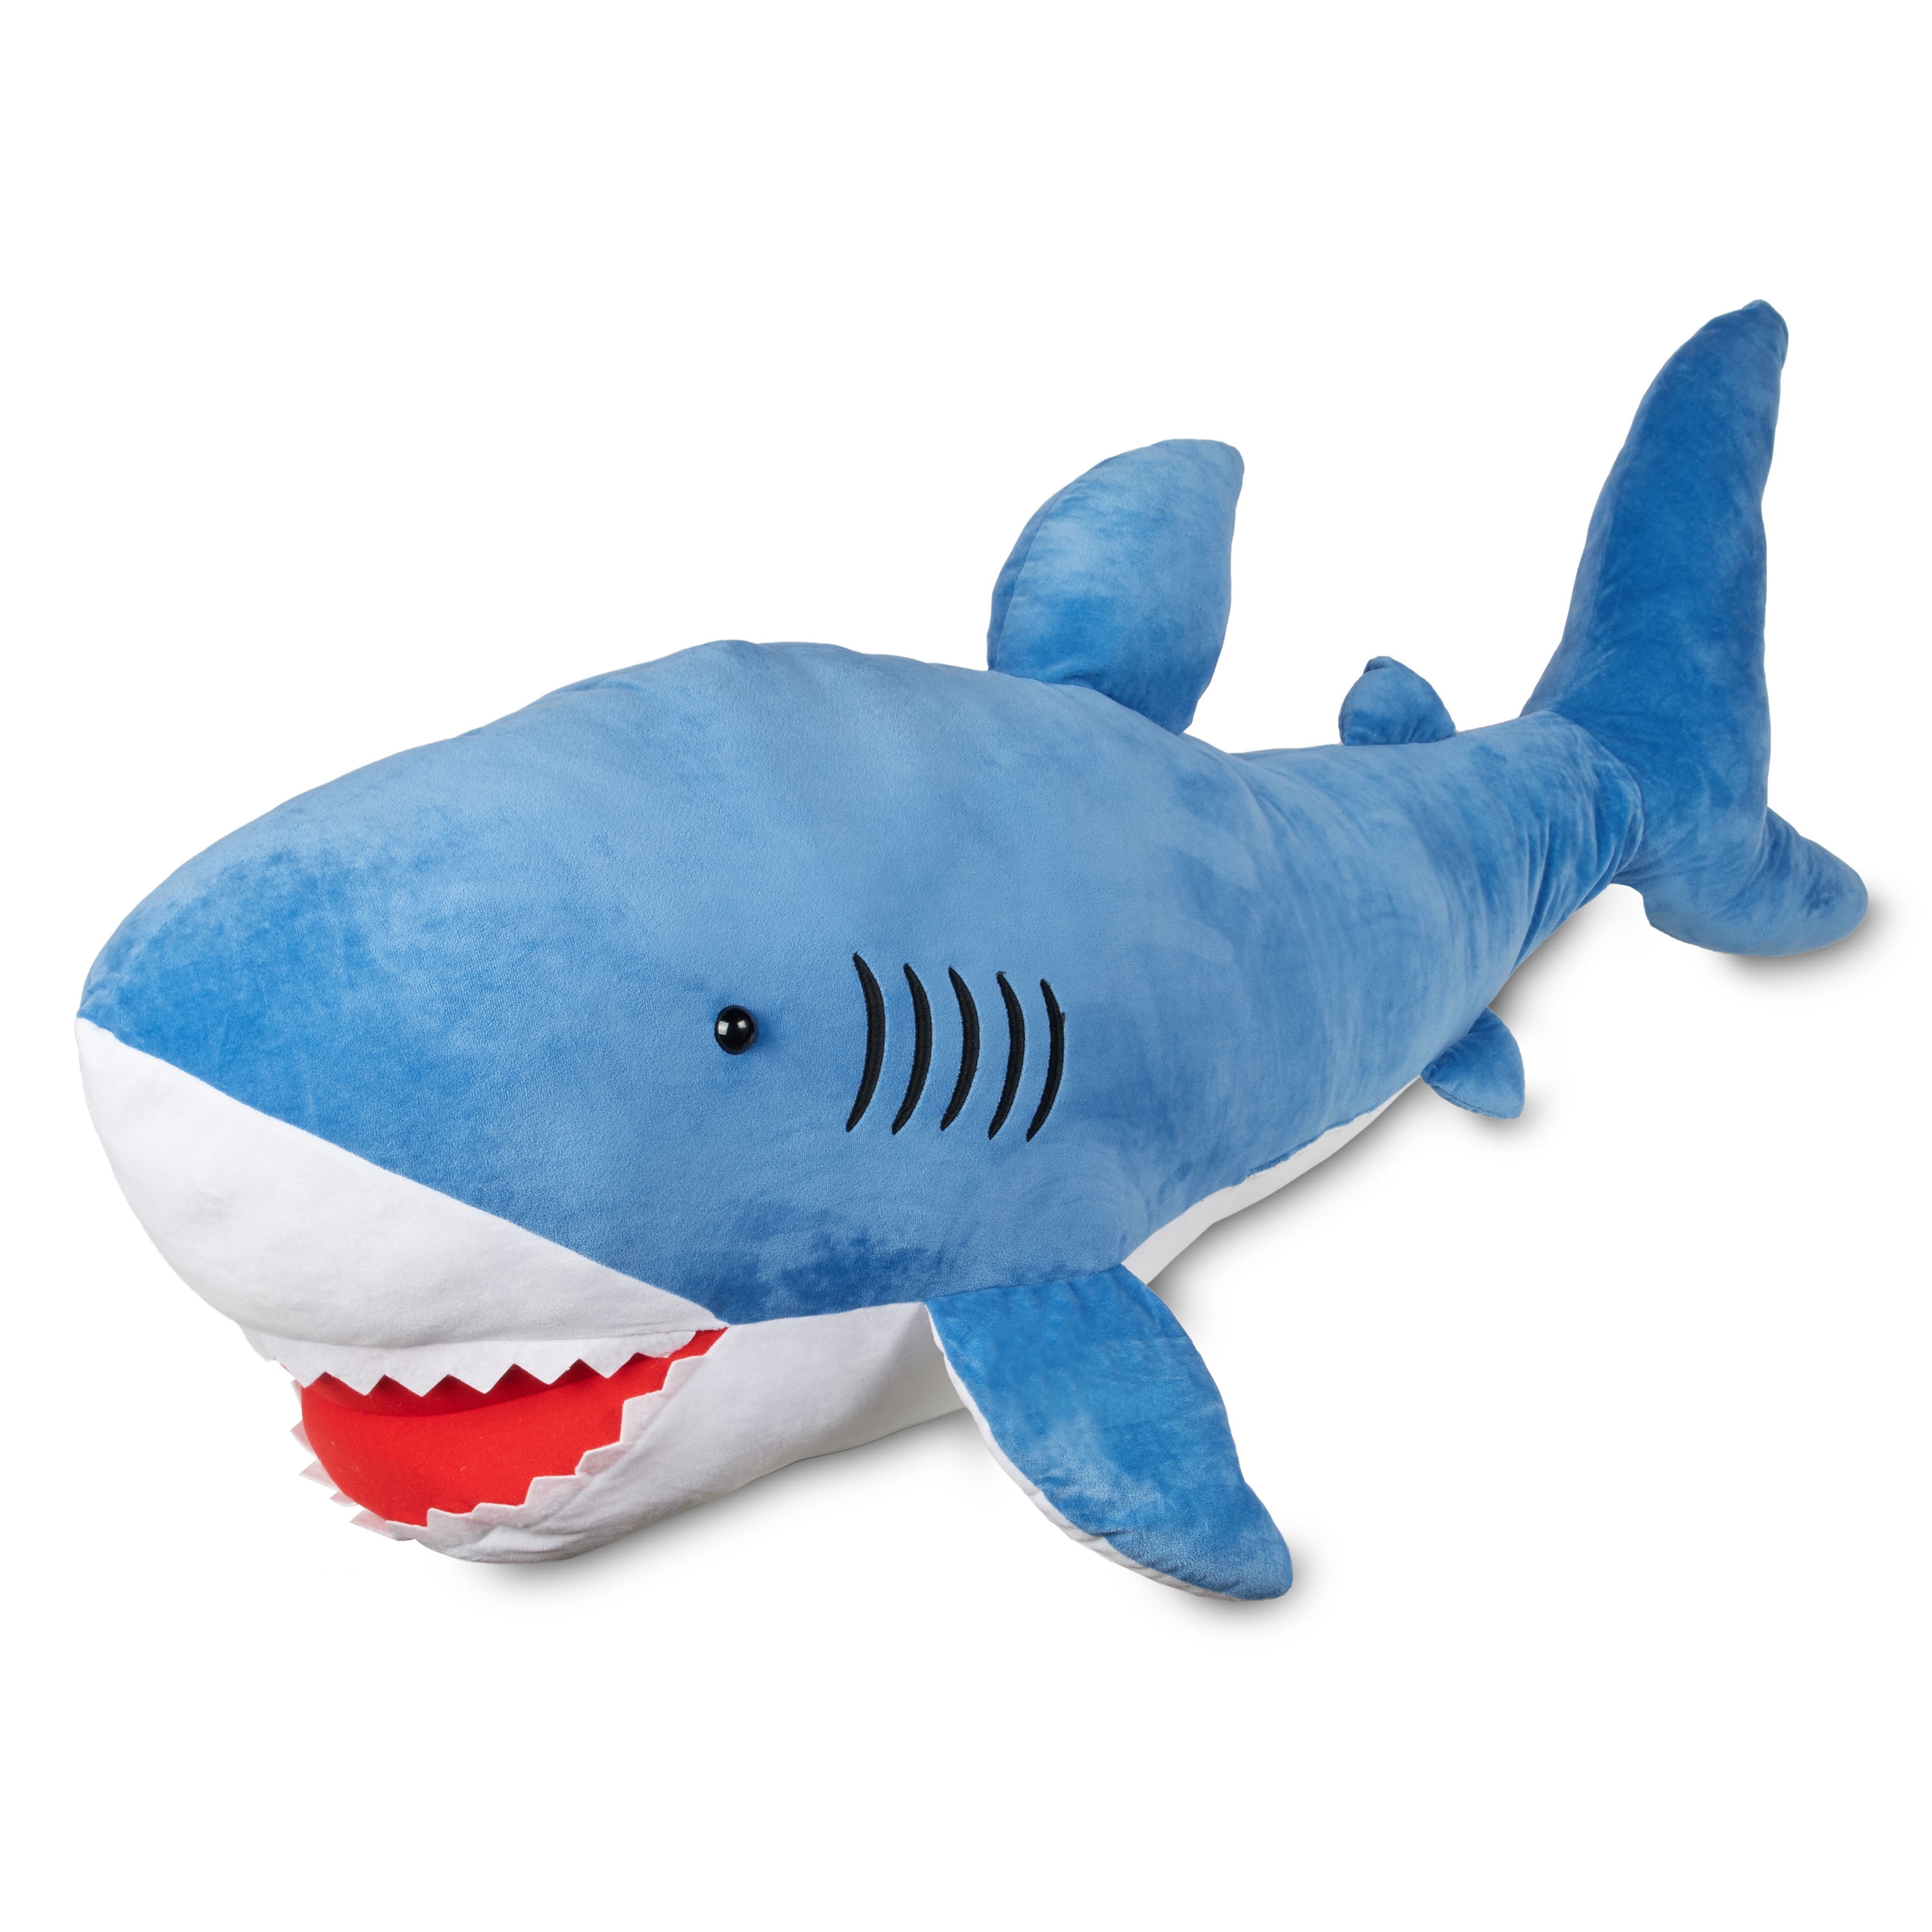 GIANT Stuffed Animal Shark Plush - Walmart.com - Walmart.com